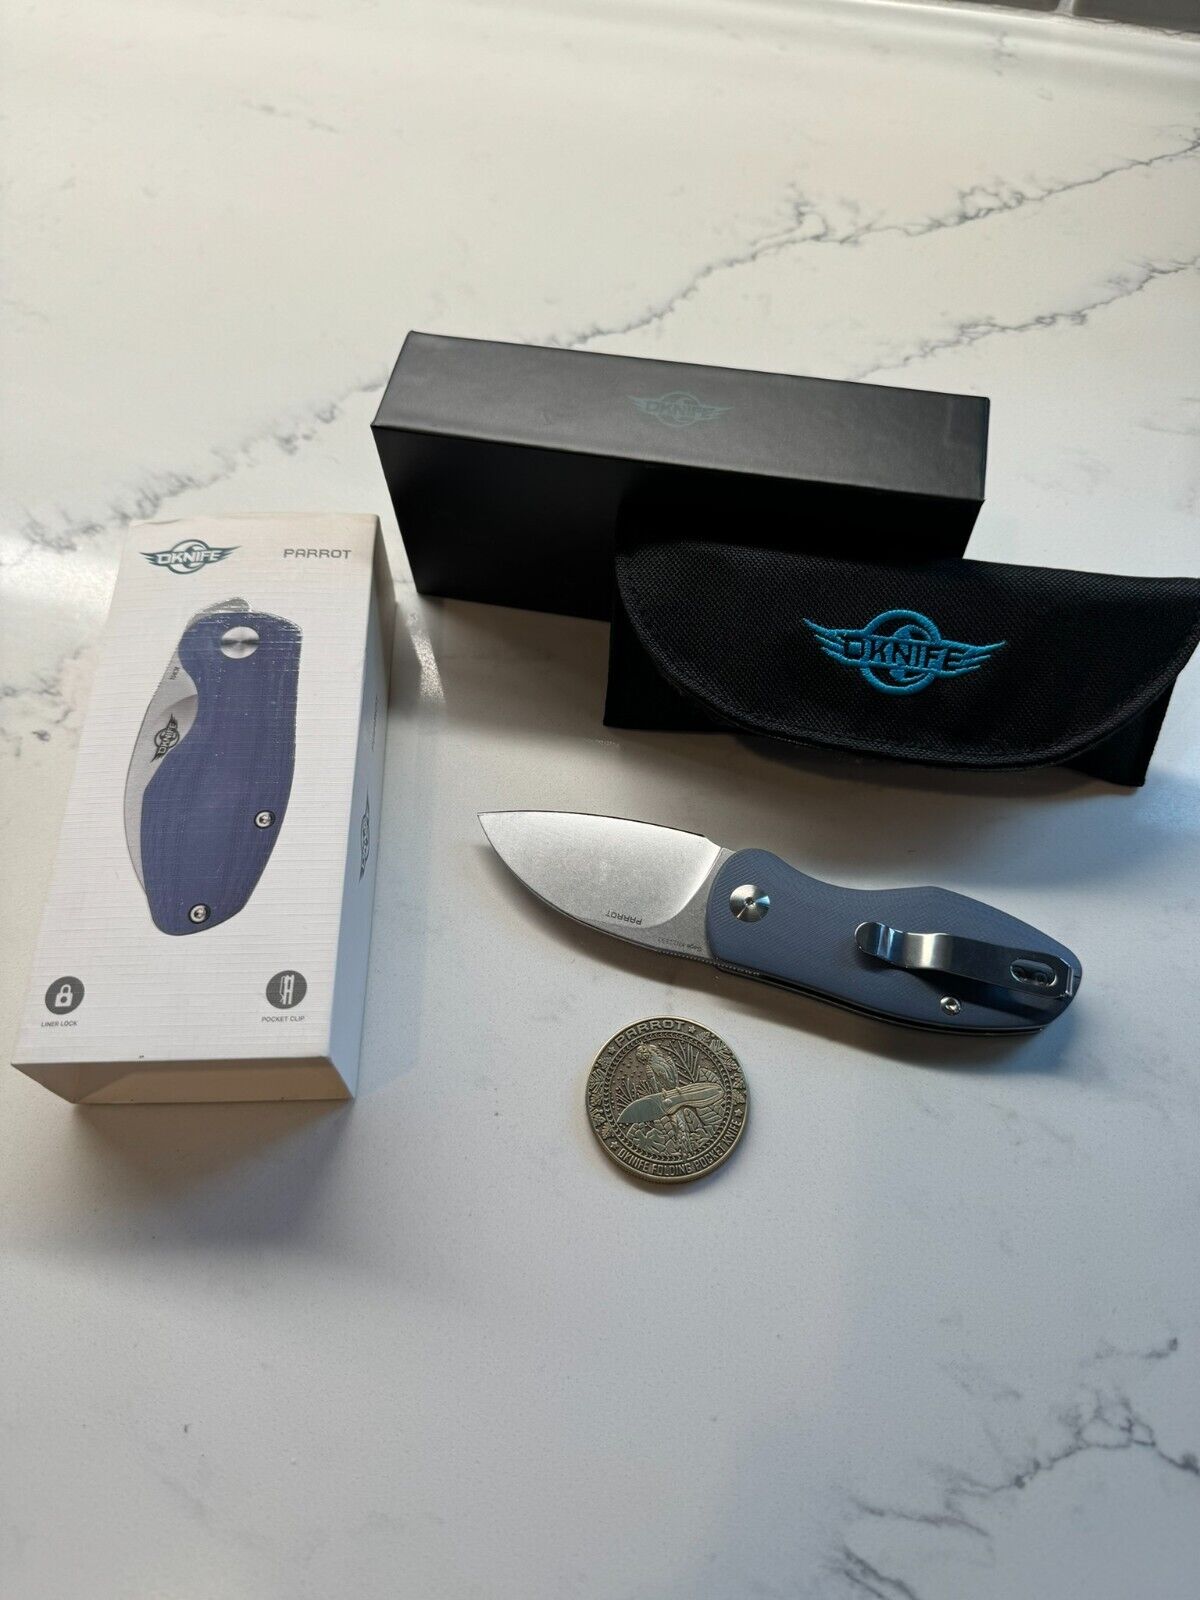 Oknife Parrot Tactical Folding Pocket Knife Sheepsfoot Stainless Steel Blade